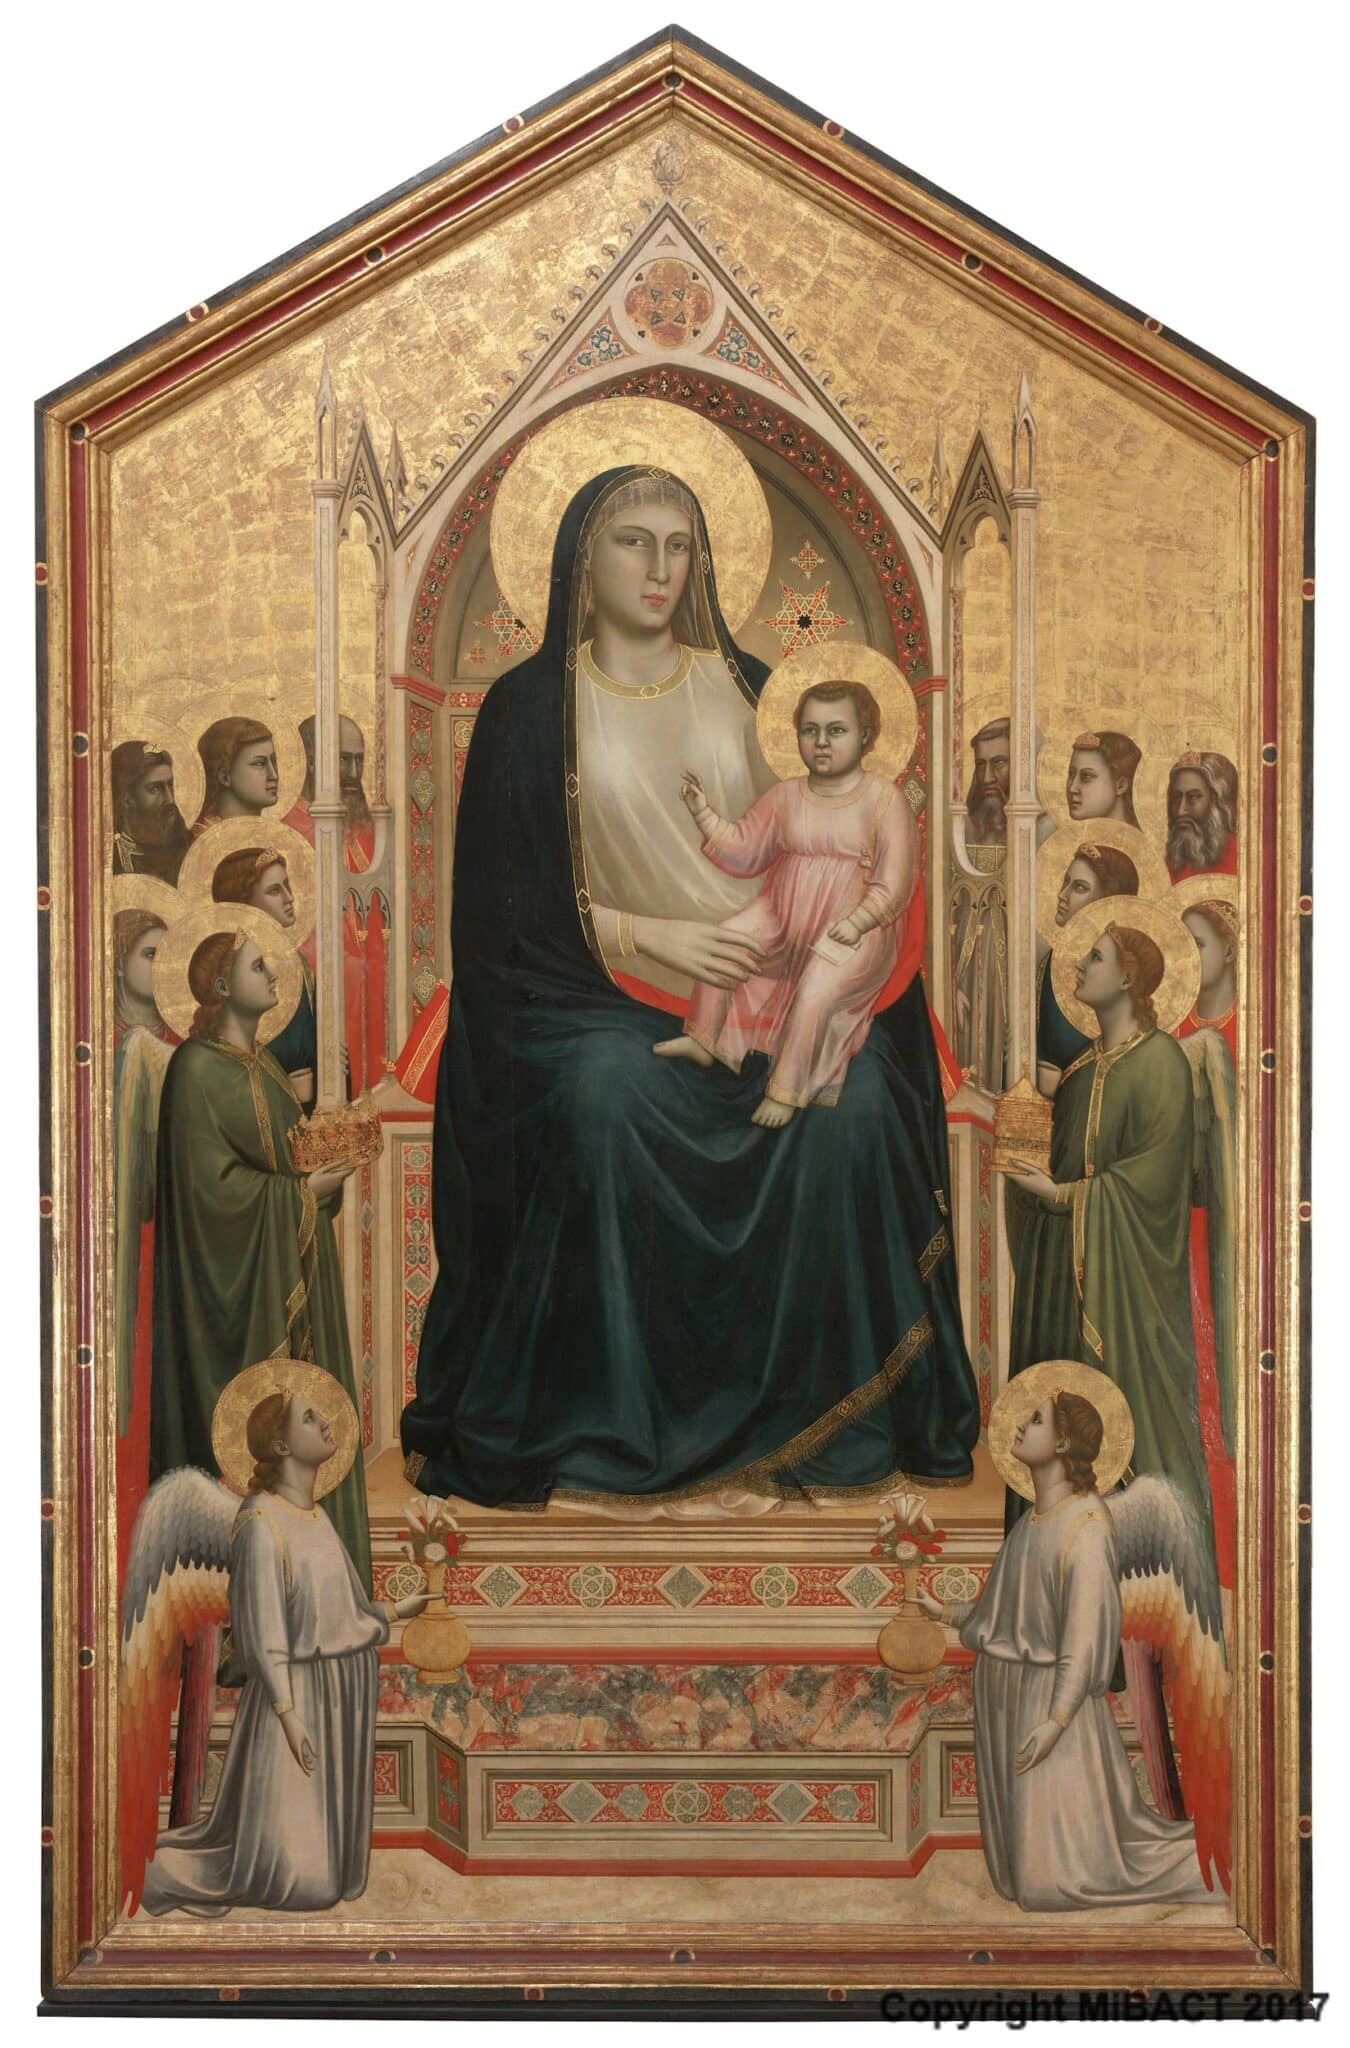 Enthroned Virgin and Child surrounded by angels and saints (Ognissanti Maestà) © Le Gallerie degli Uffizi, Daniela Parenti